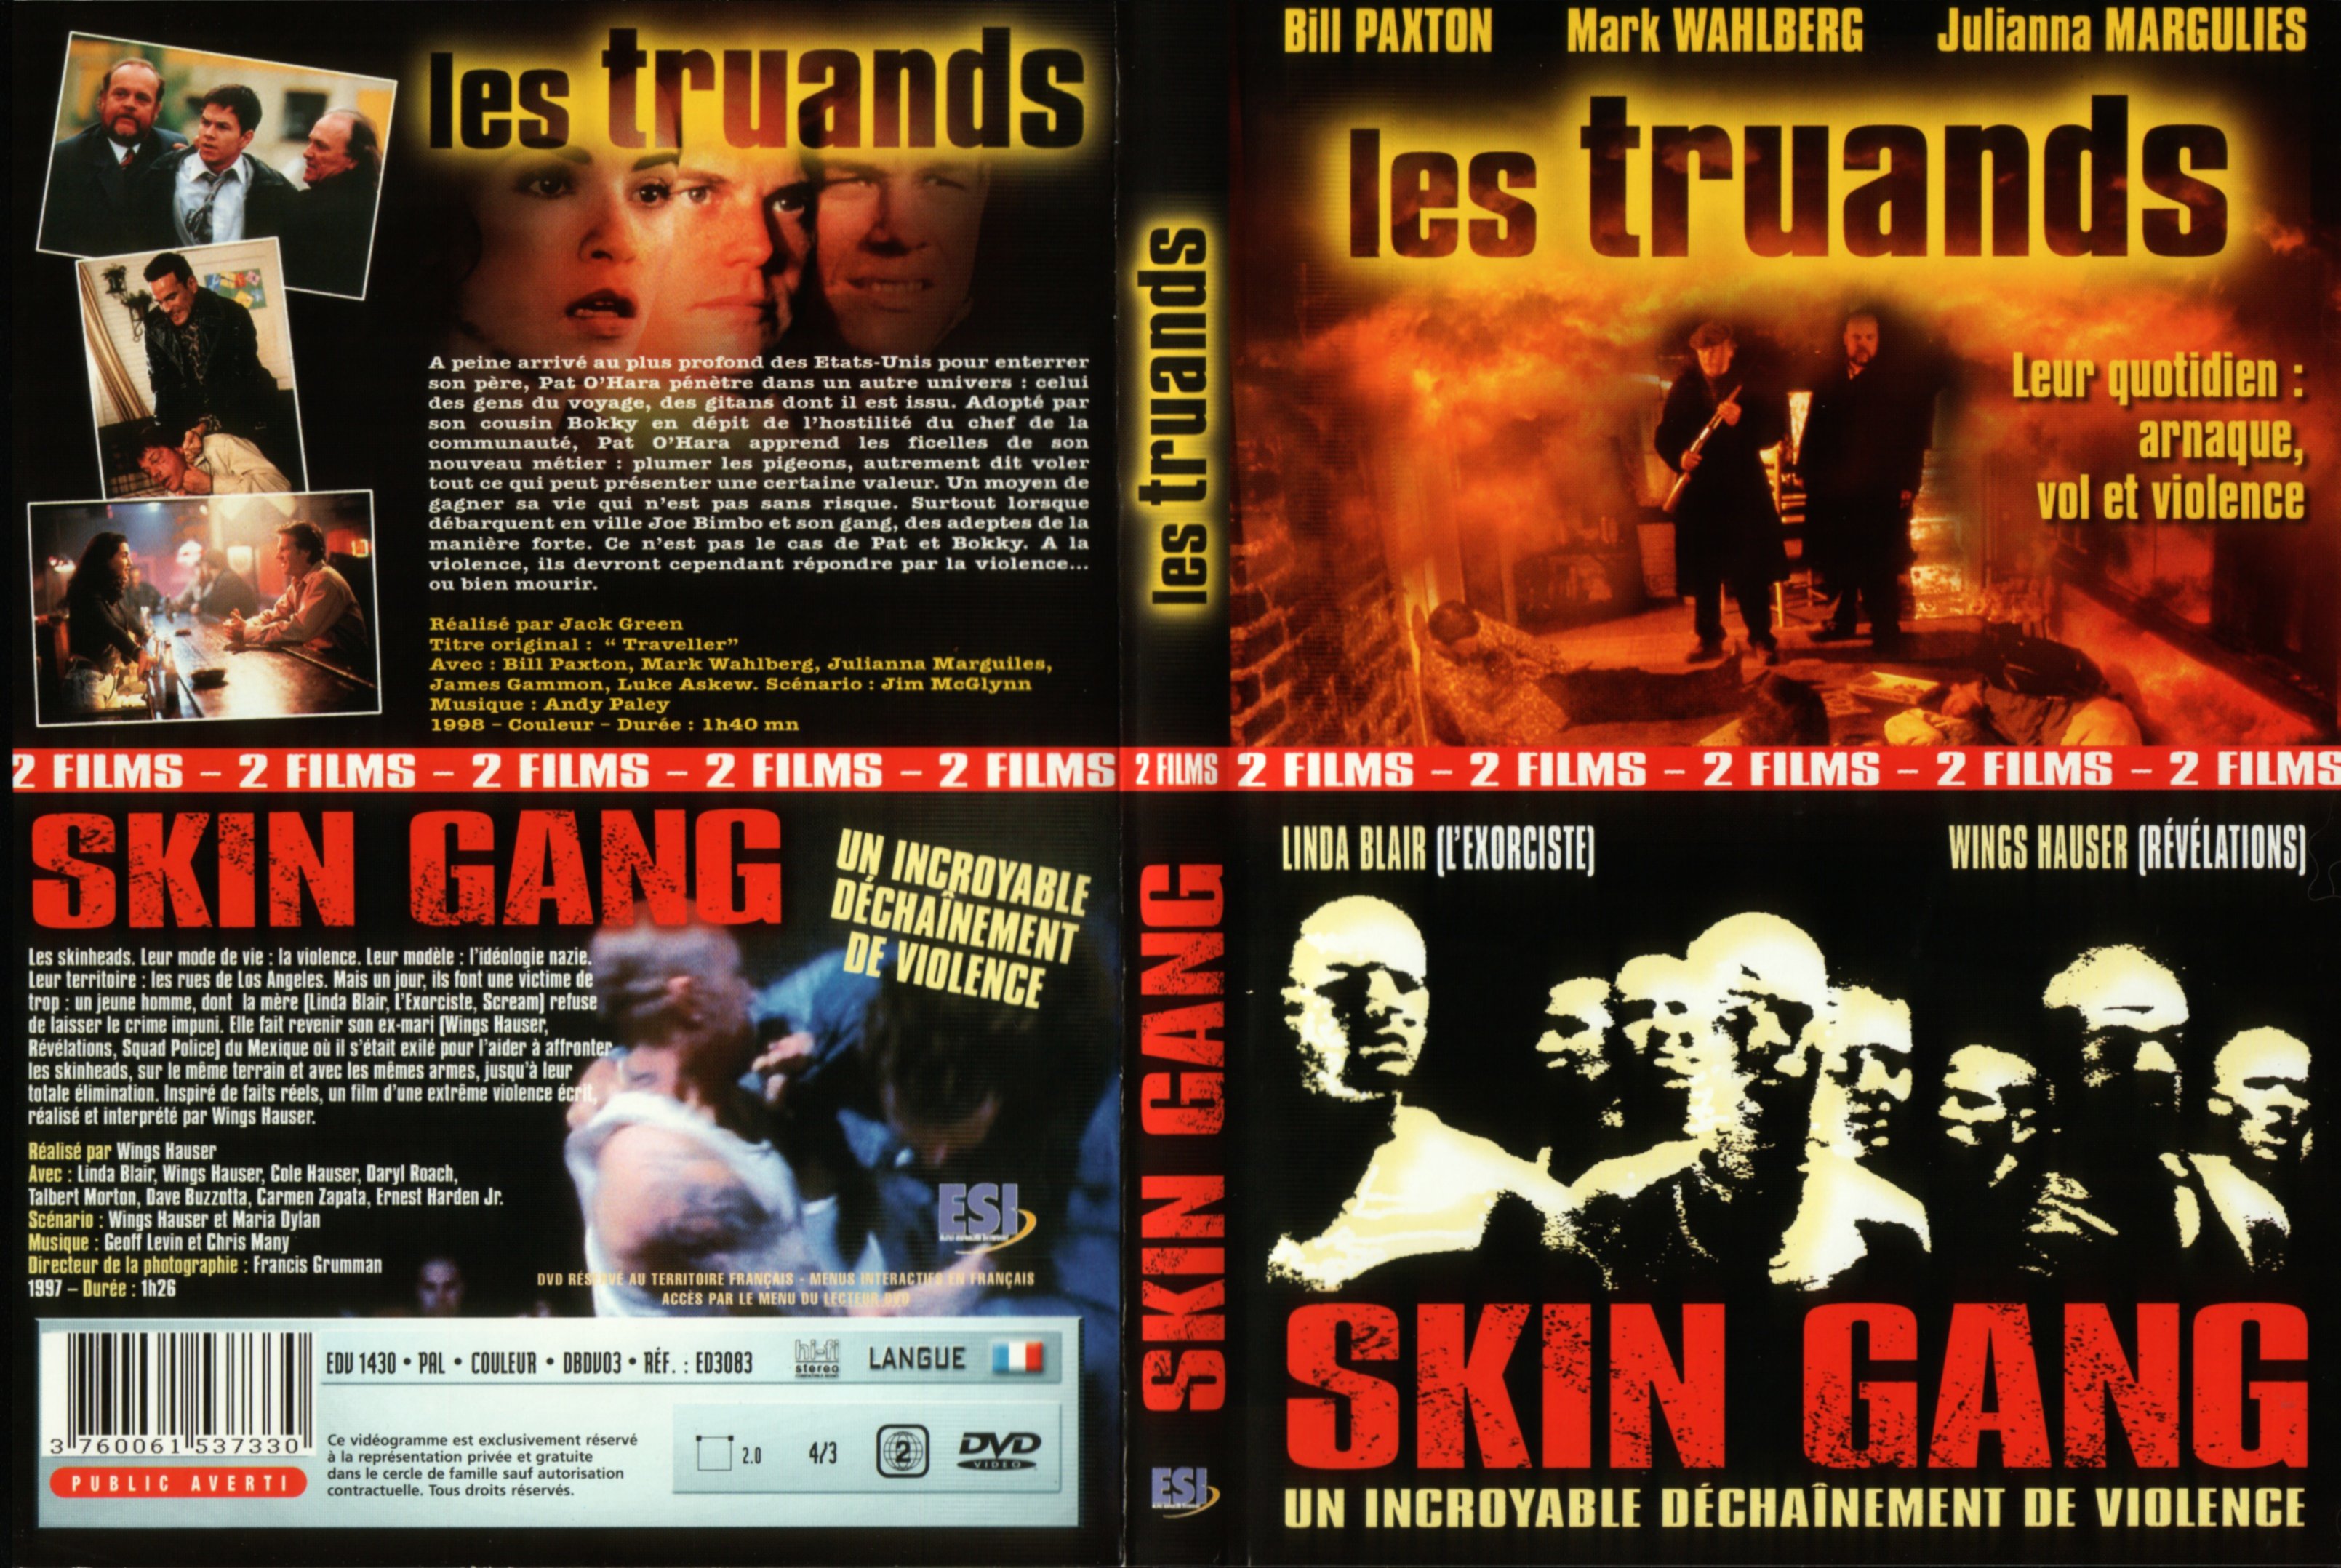 Jaquette DVD Les truands + skin gang